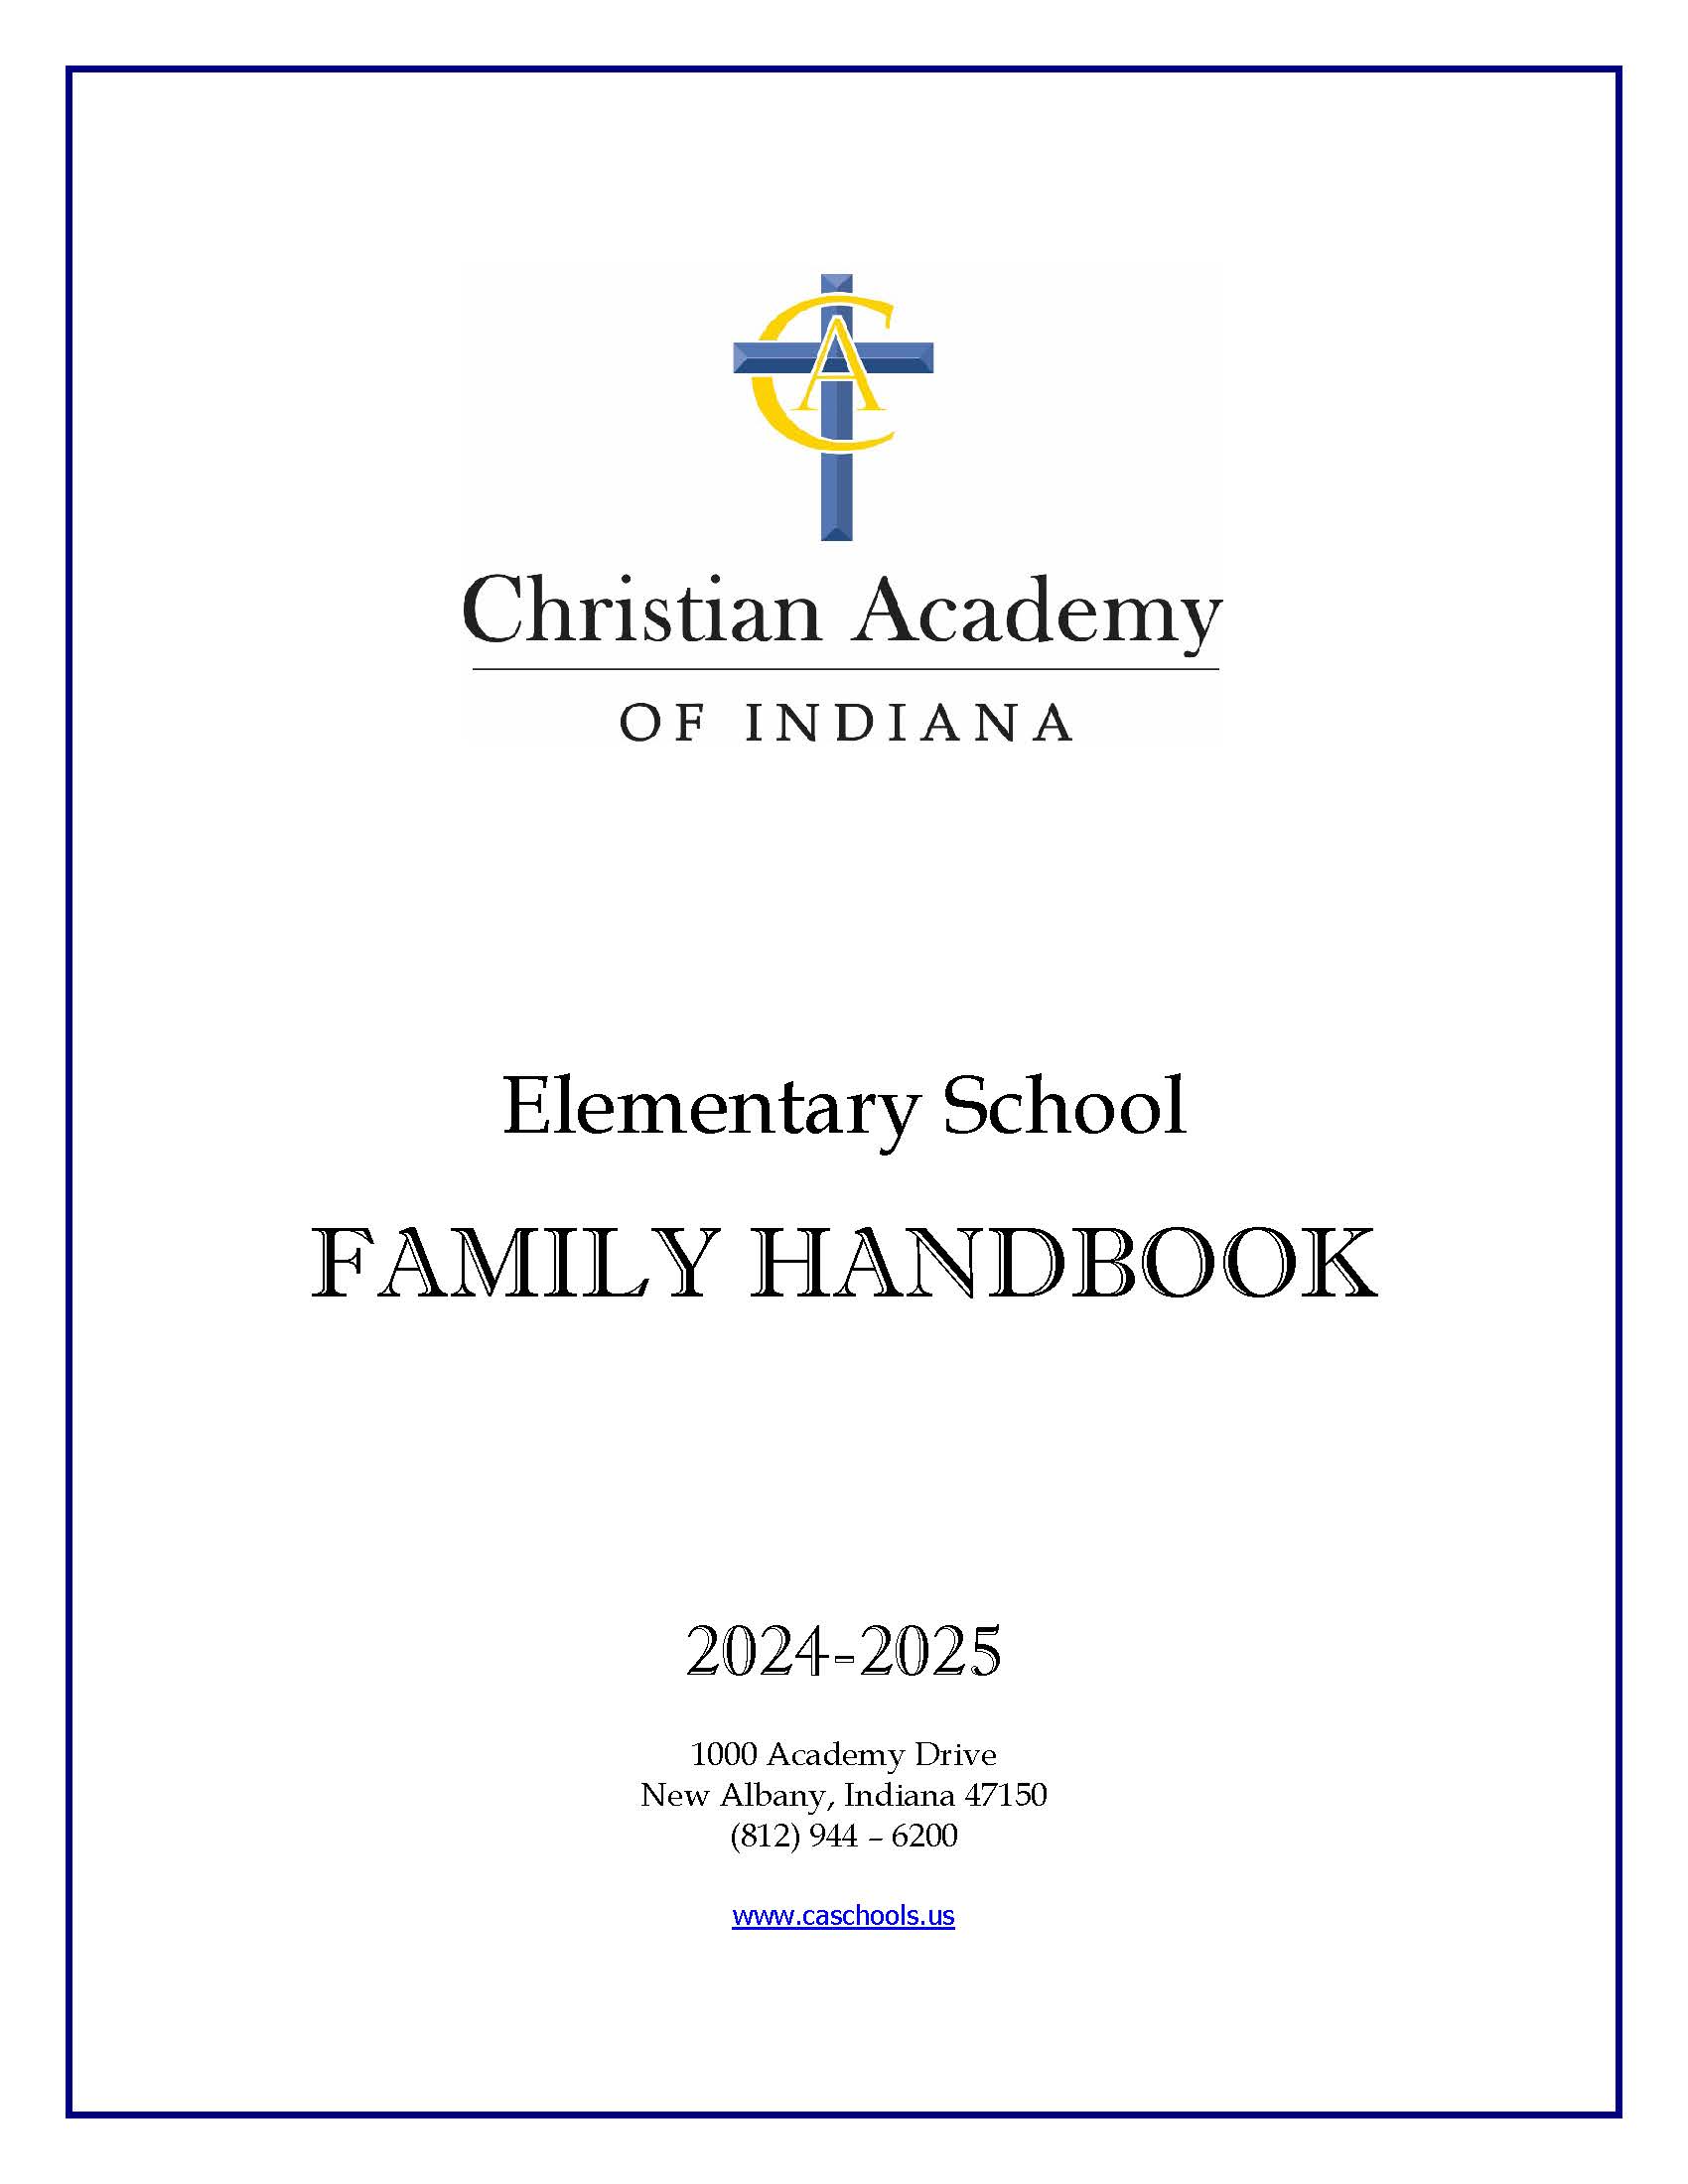 Christian Academy School System | Christian Academy of Indiana | Elementary | 2024-2025 Handbook